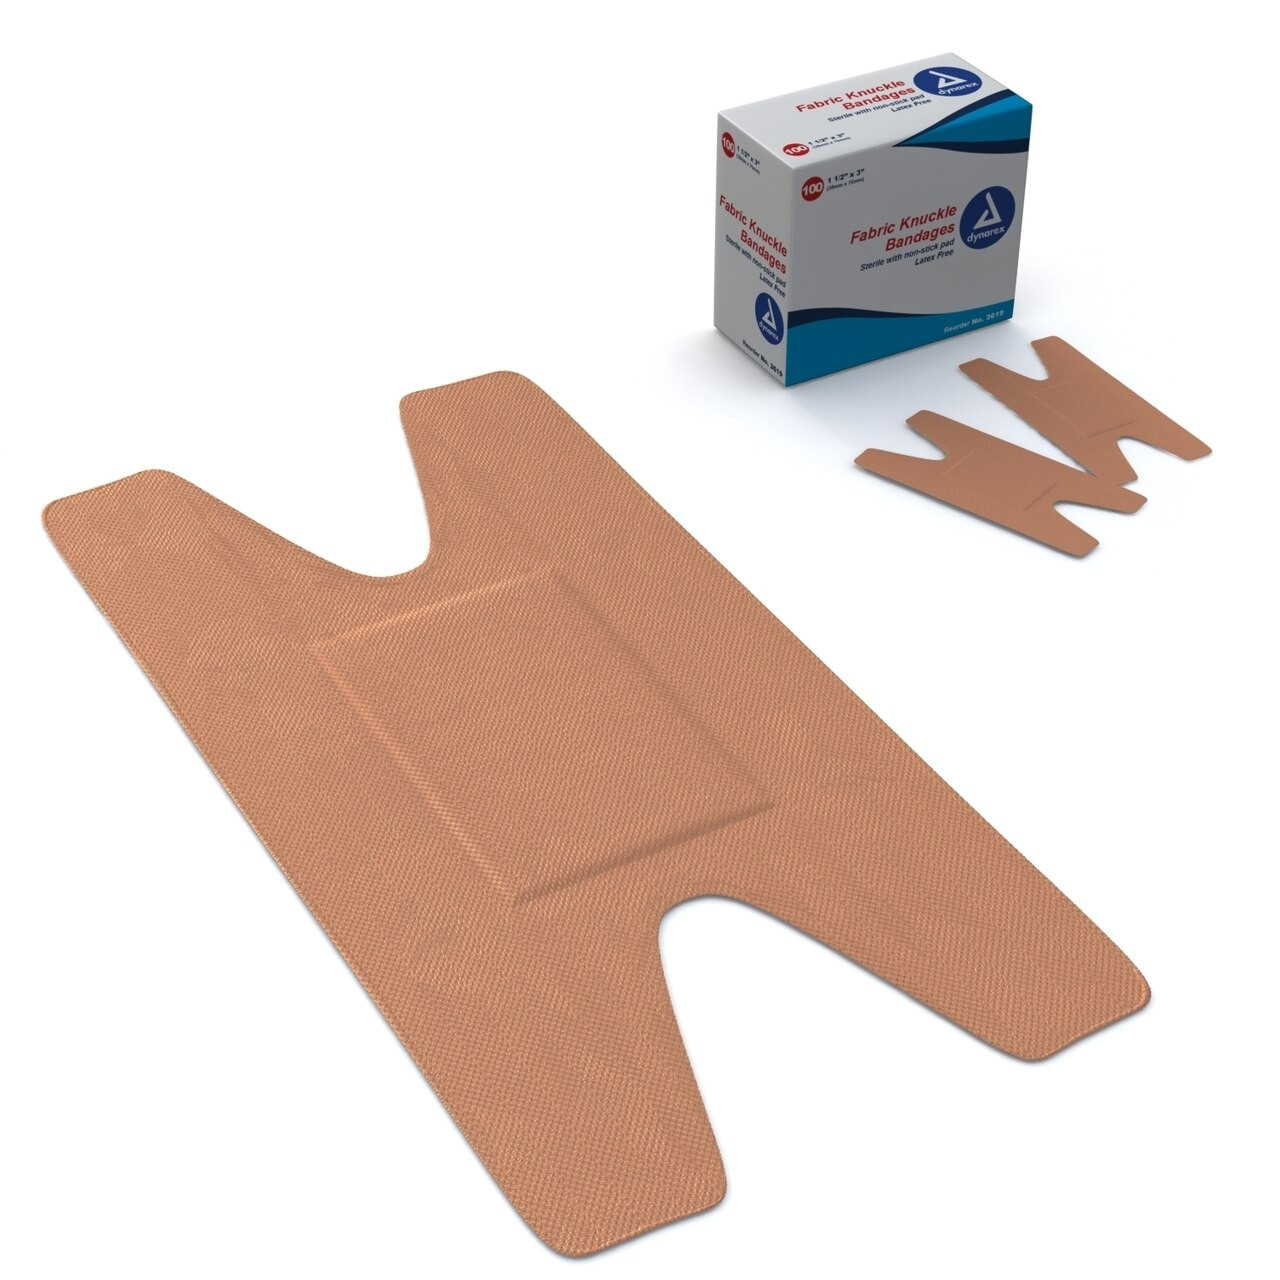 Elastic fabric adhesive bandages 100 per box